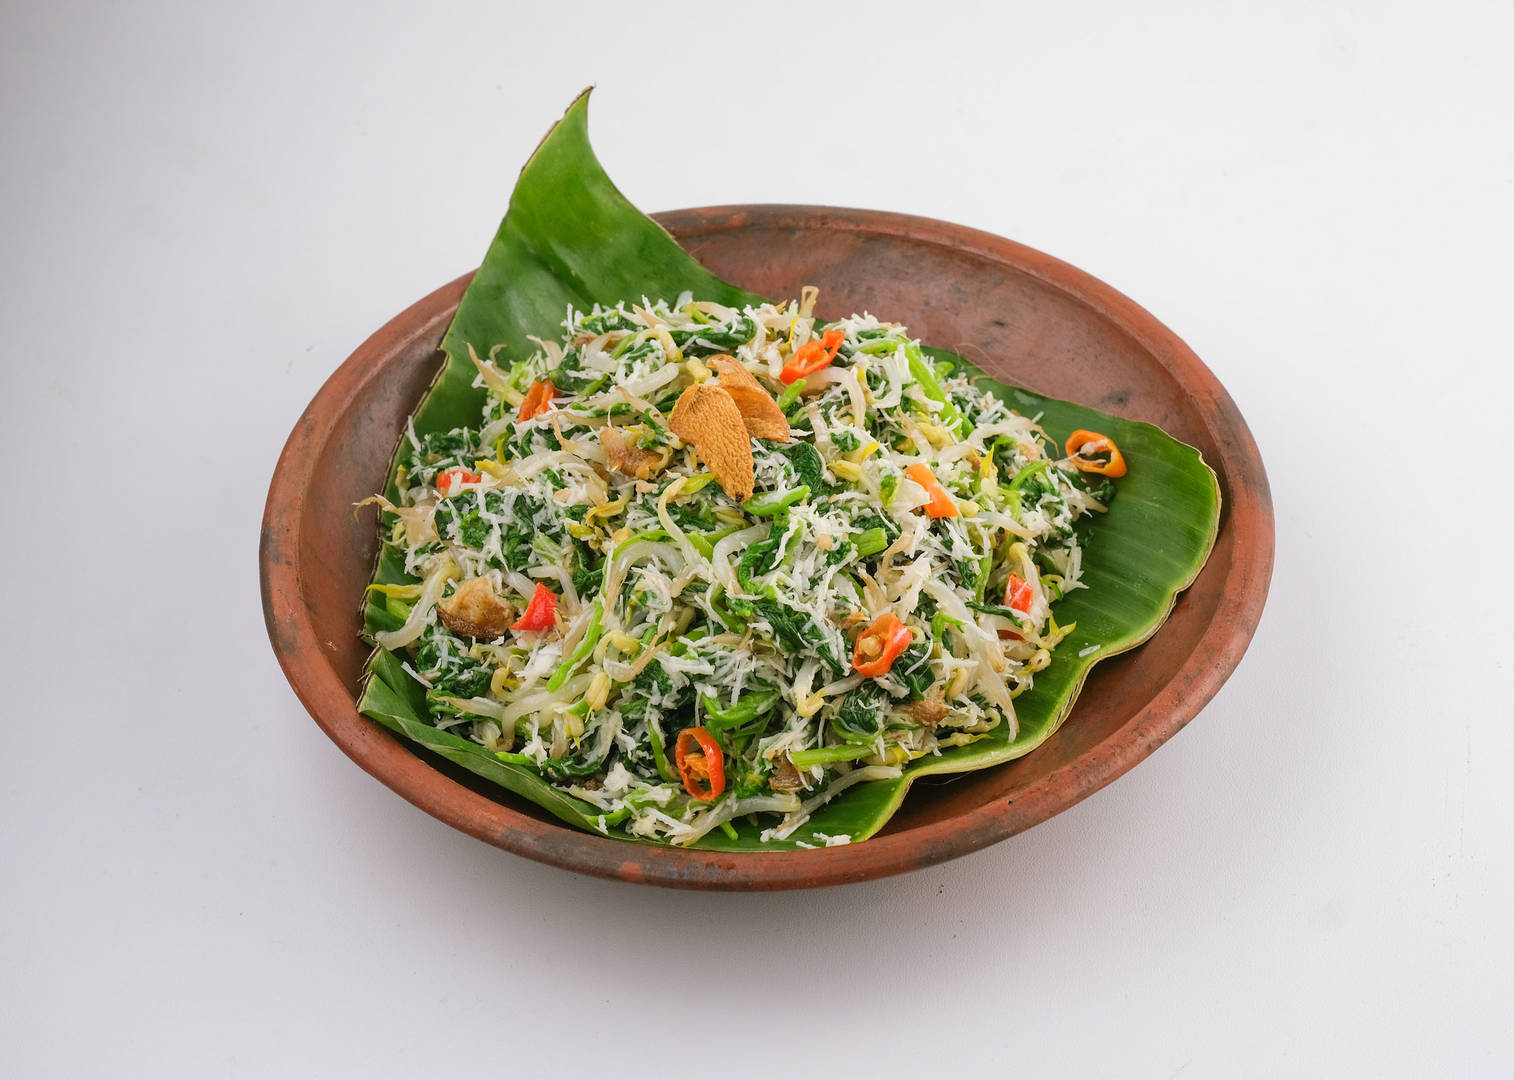 A bowl of Sayur Urab, a popular Balinese vegetable dish